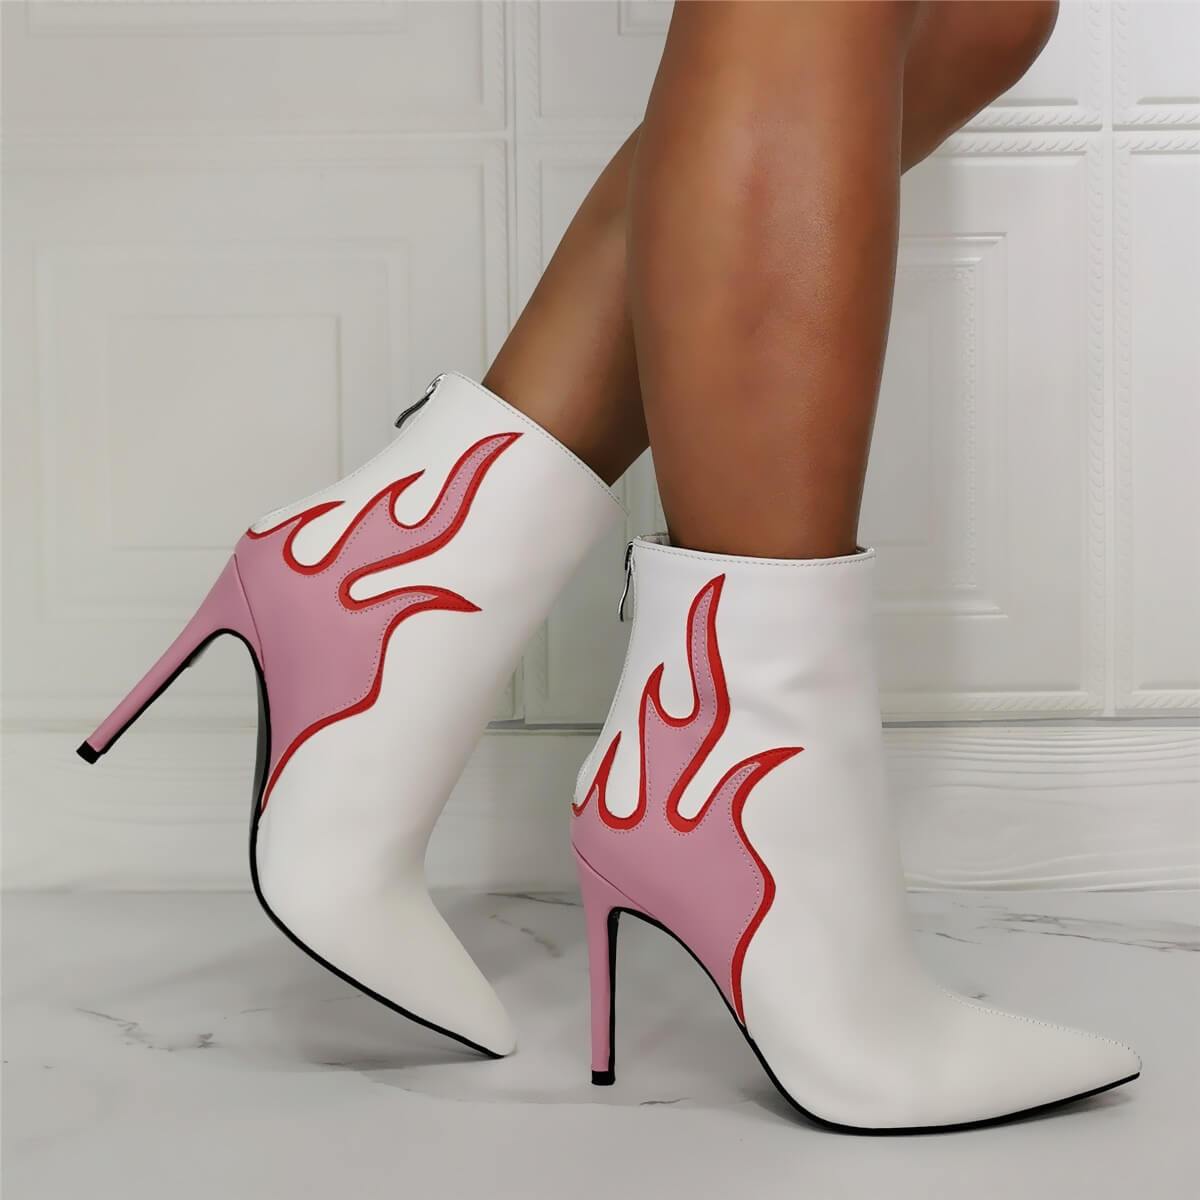 White PU Point Toe Fire Print High Heel Boots